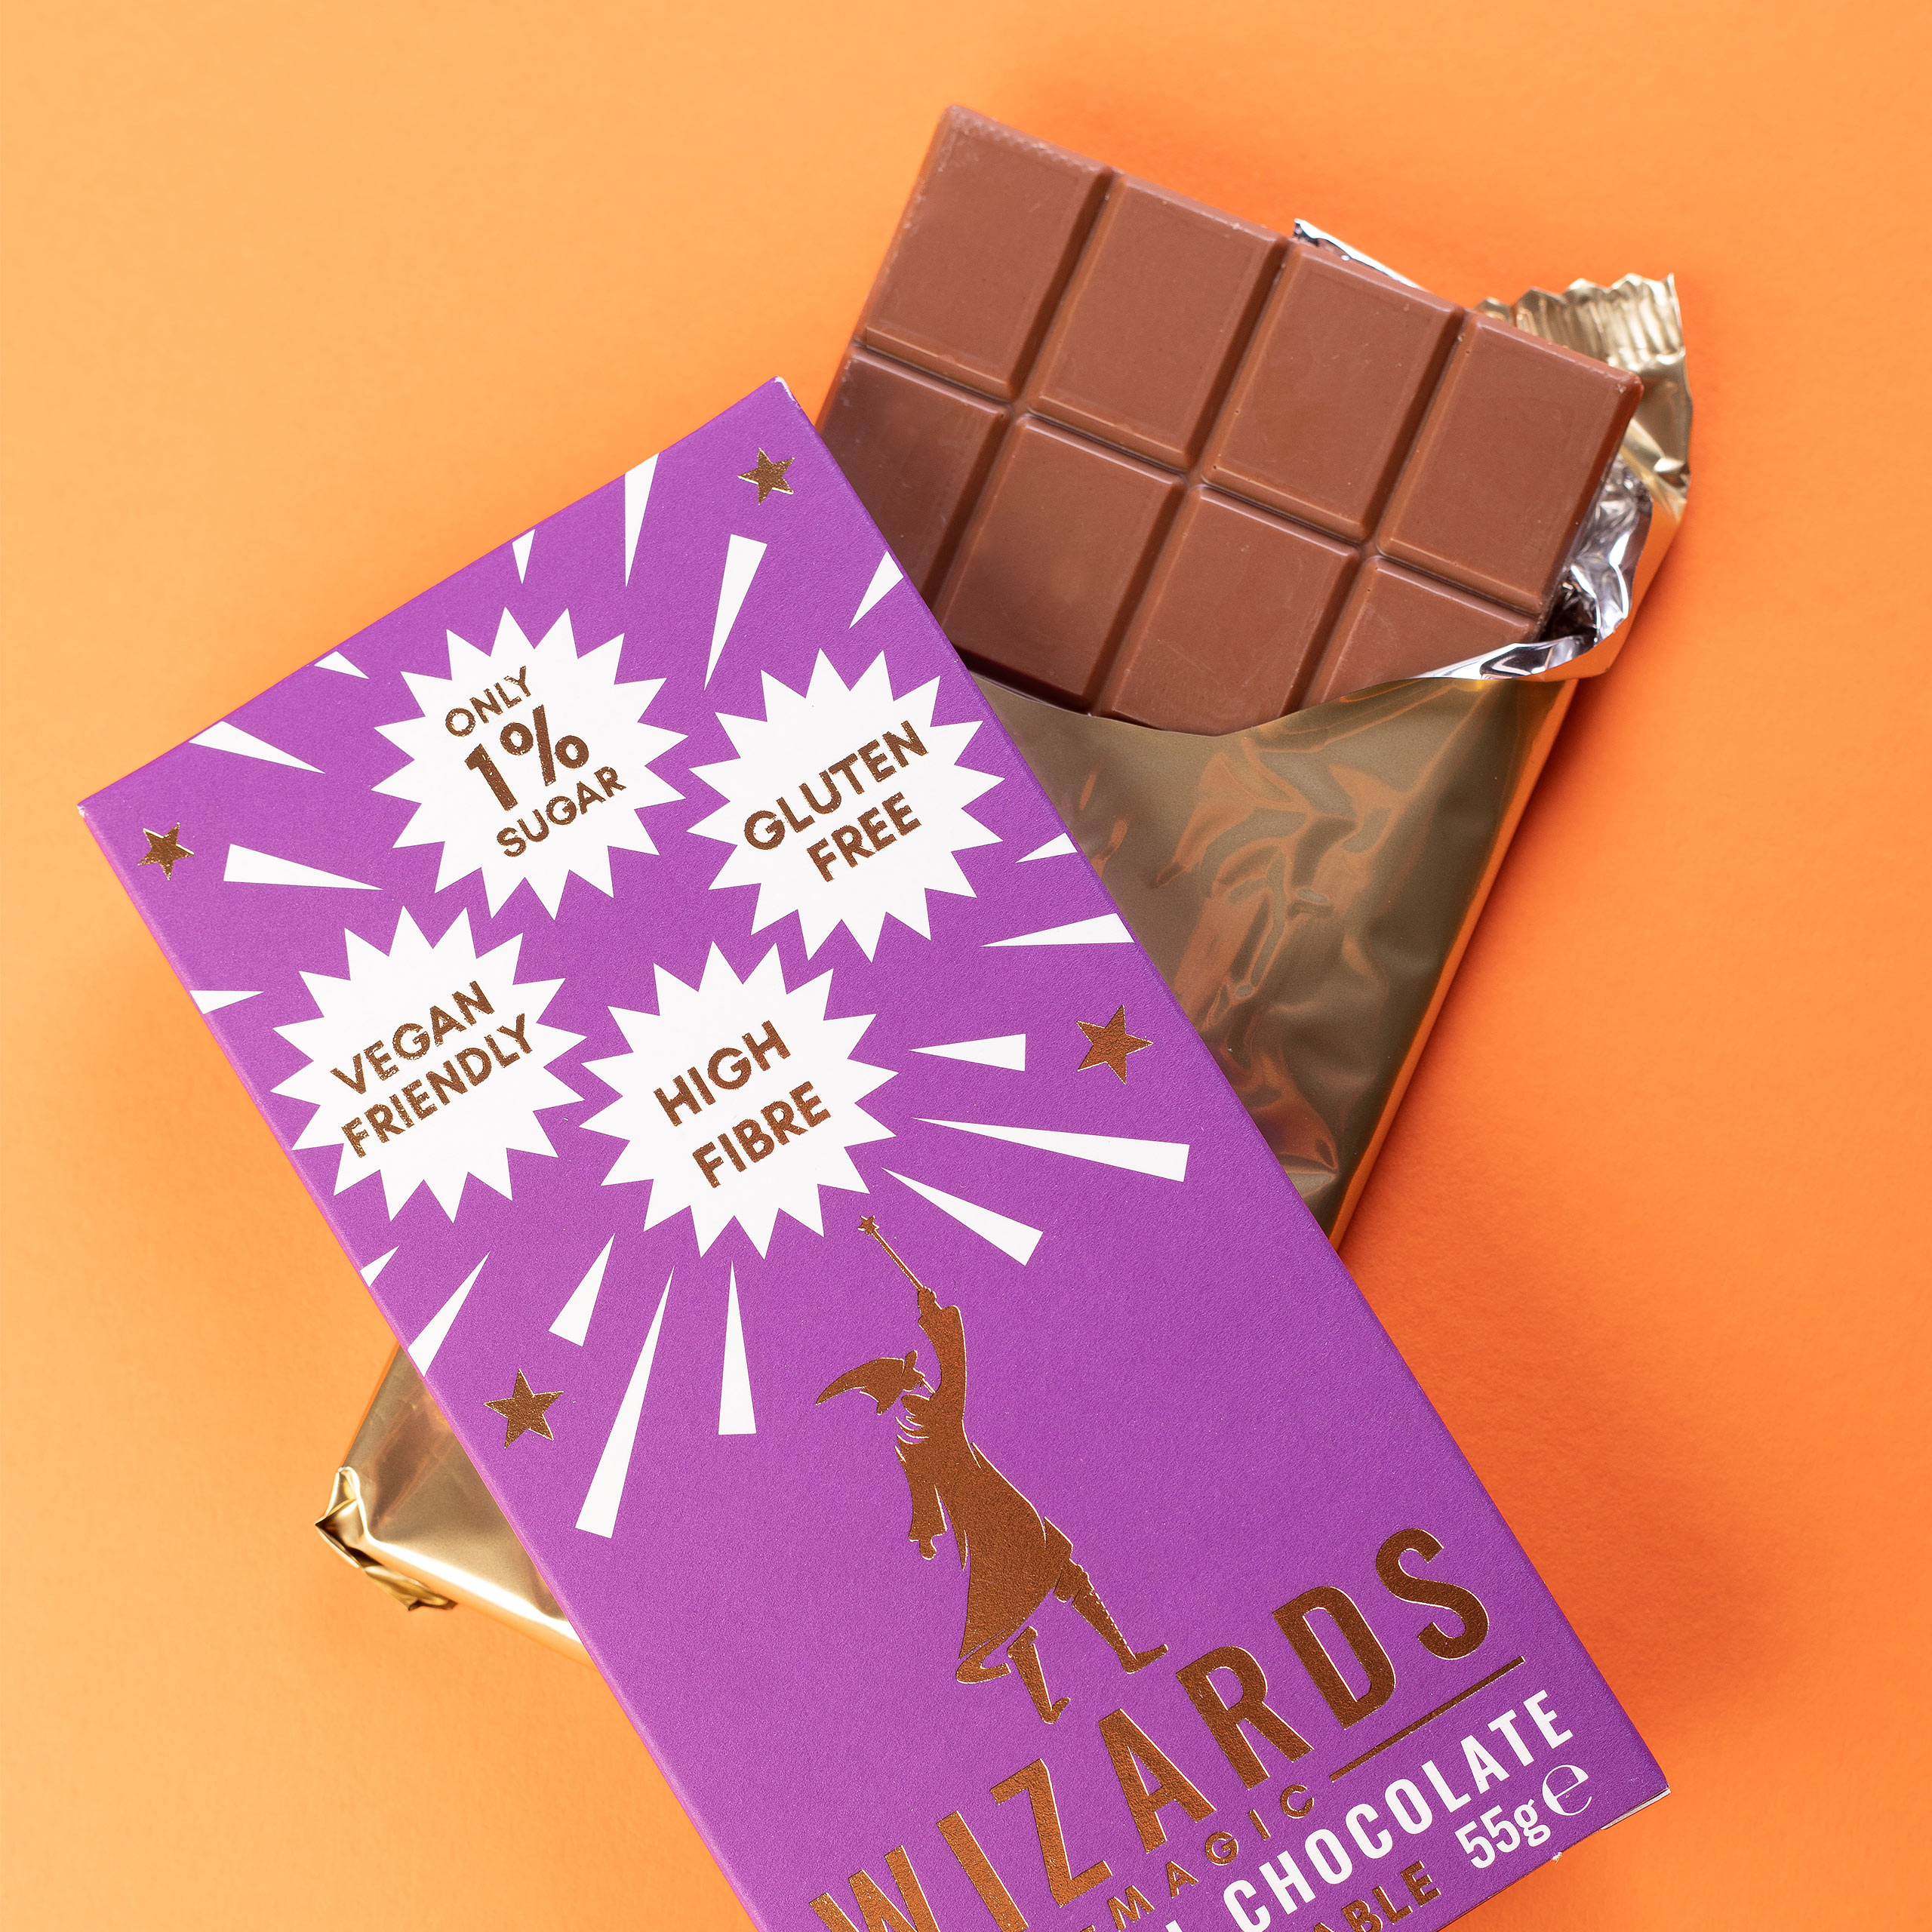 Wizards Magic - Original Chocolate 12 Bars